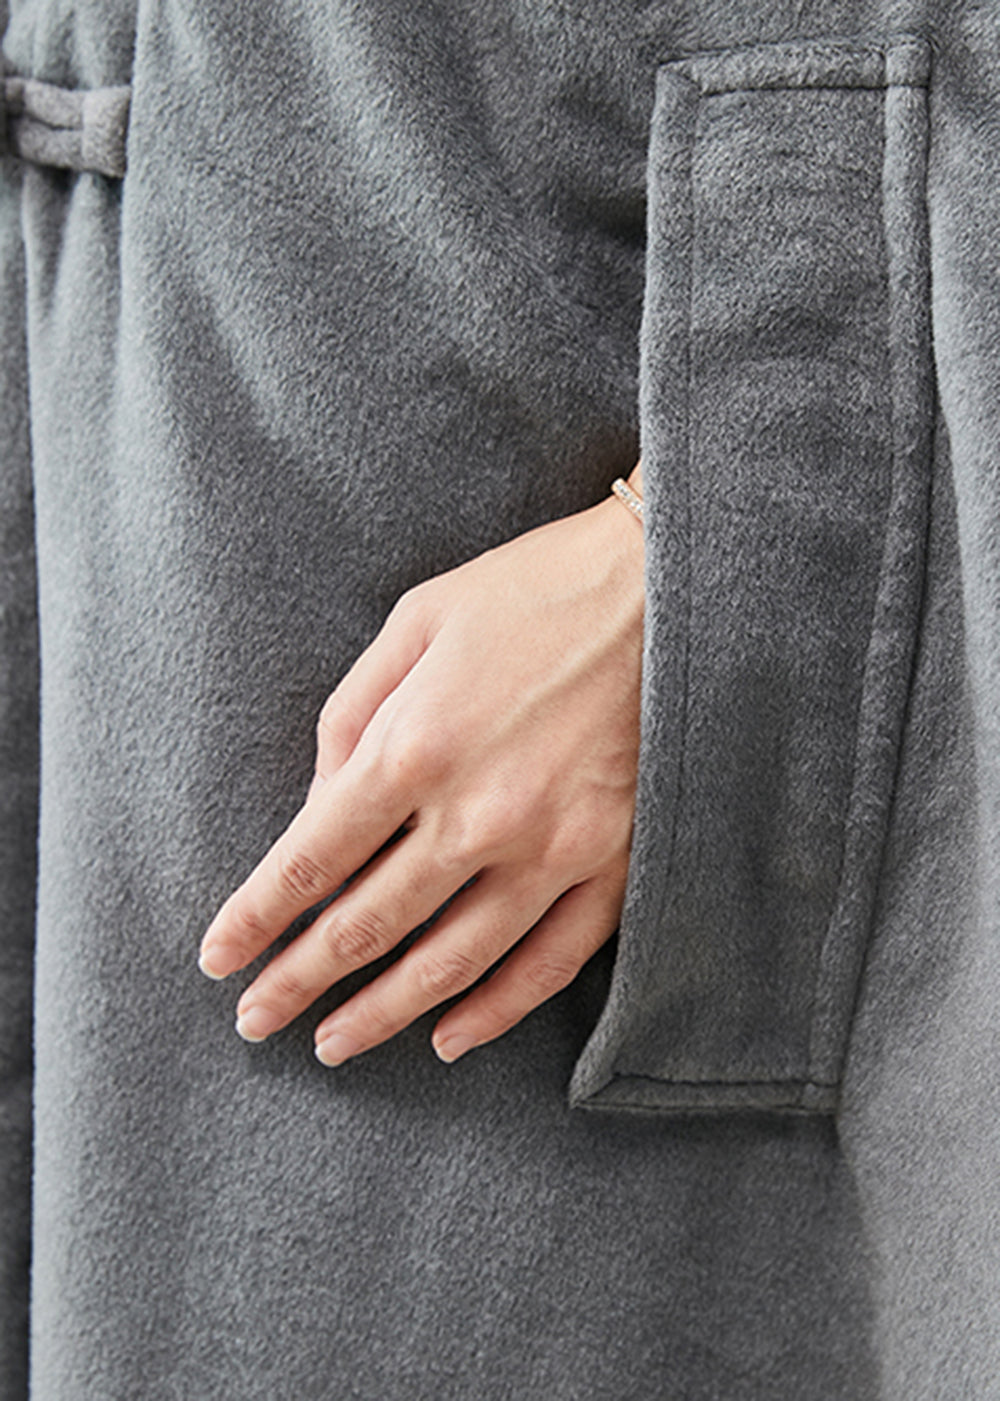 Handmade Grey Oversized Lengthen Warm Fleece Hooded Coat Cloak Sleeves